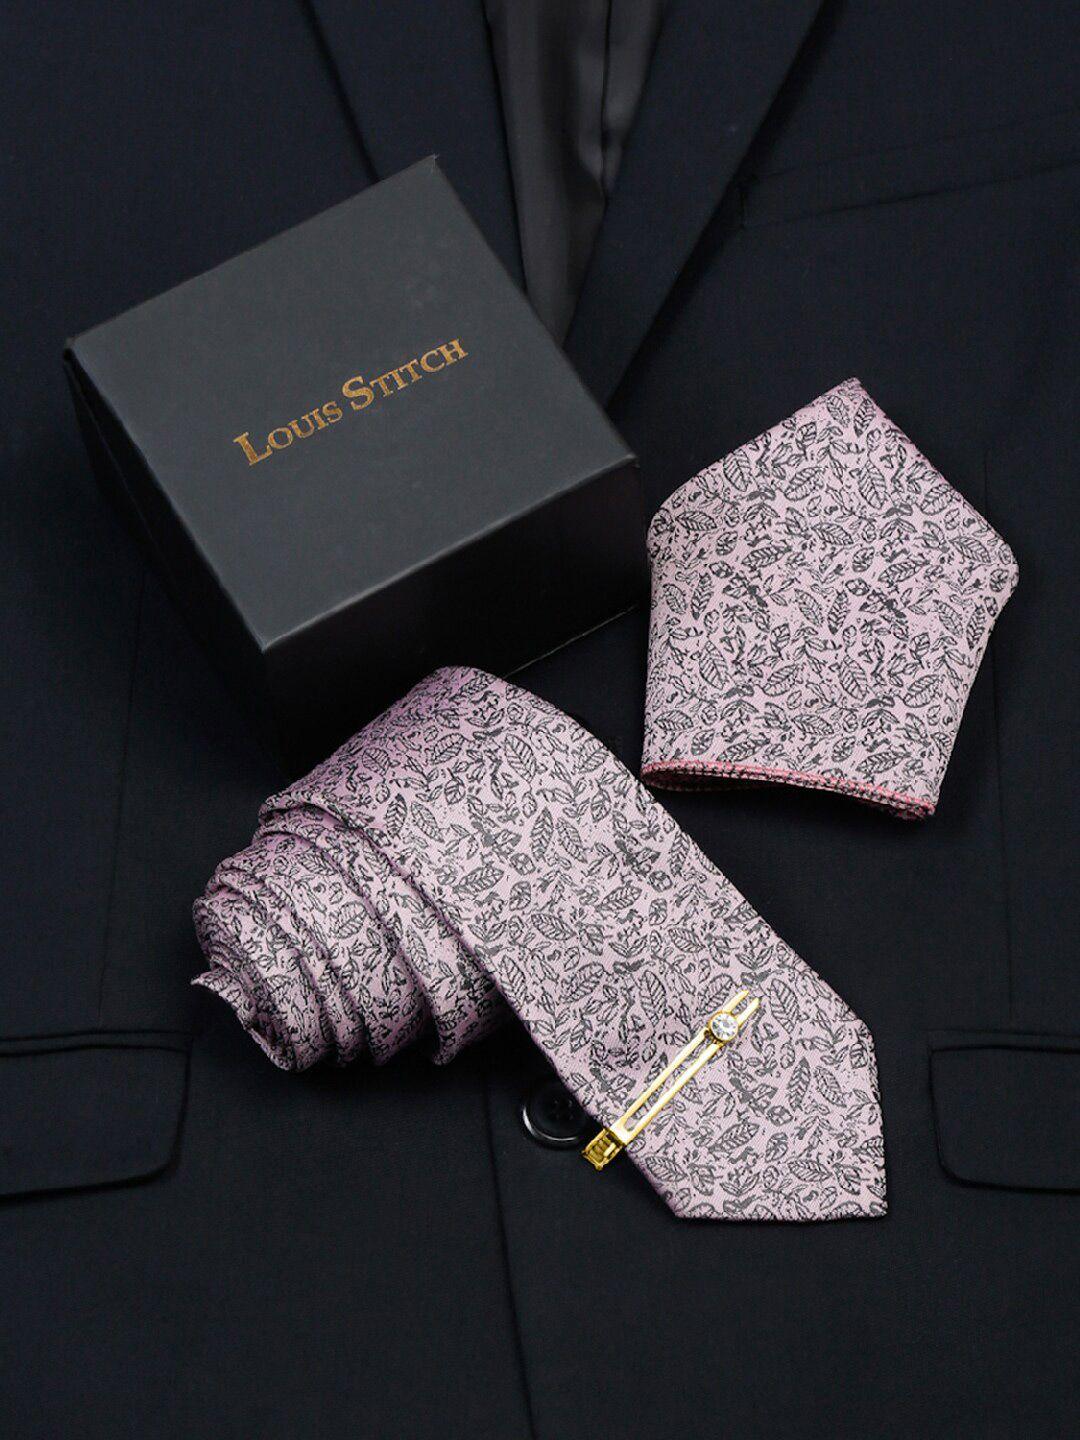 louis stitch men floral printed necktie accessory gift set